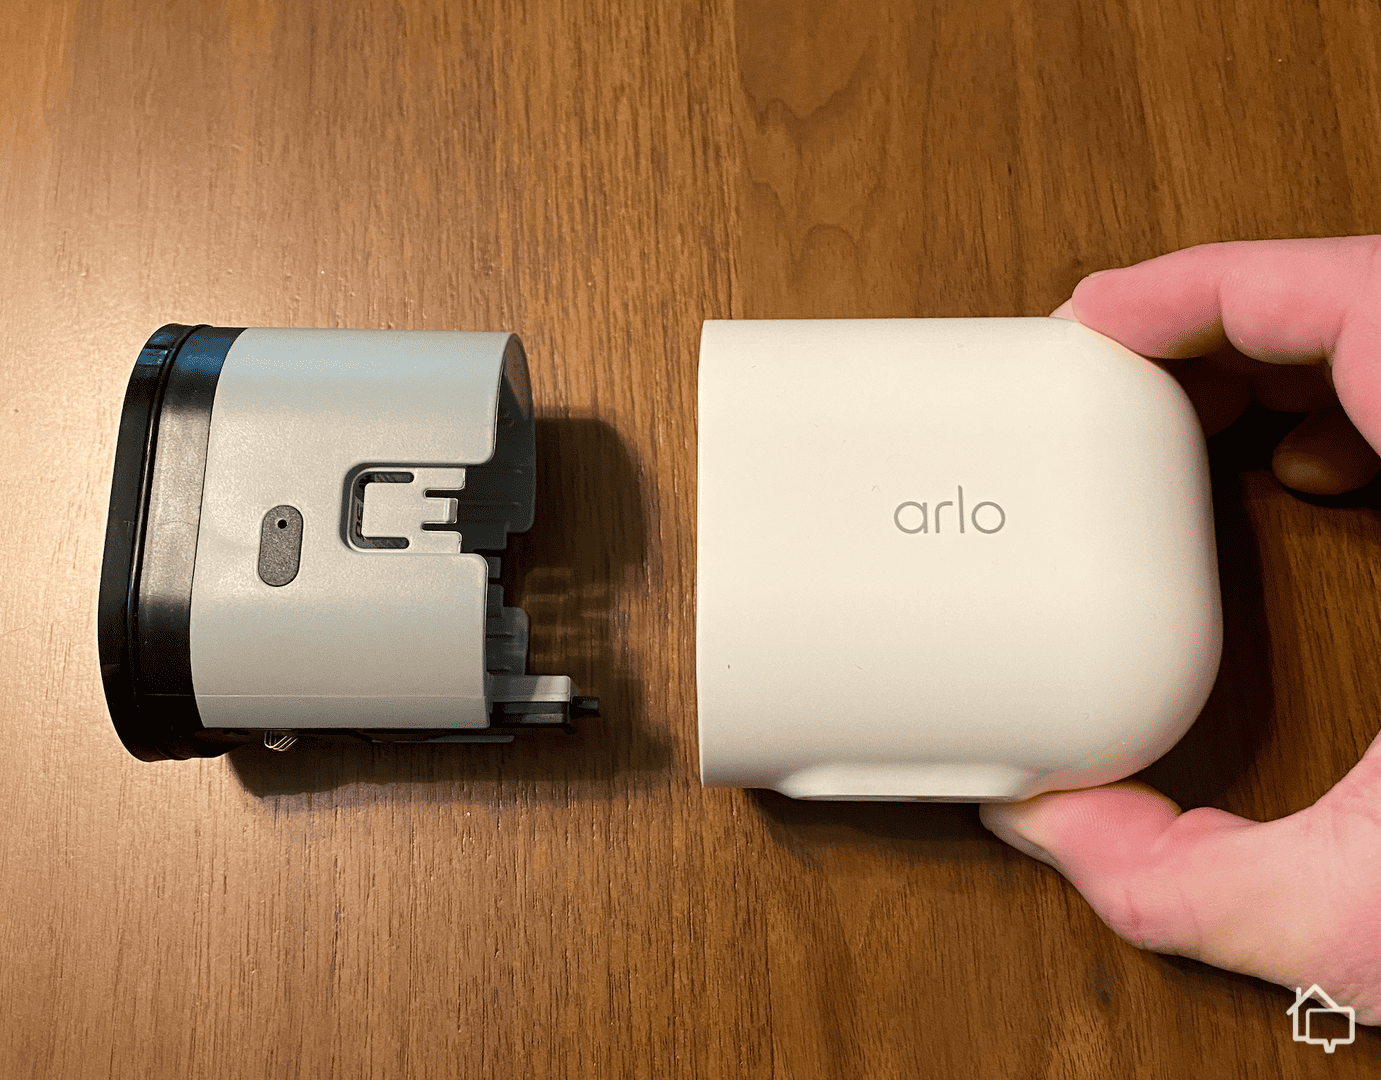 The Arlo Pro 4’s battery housing